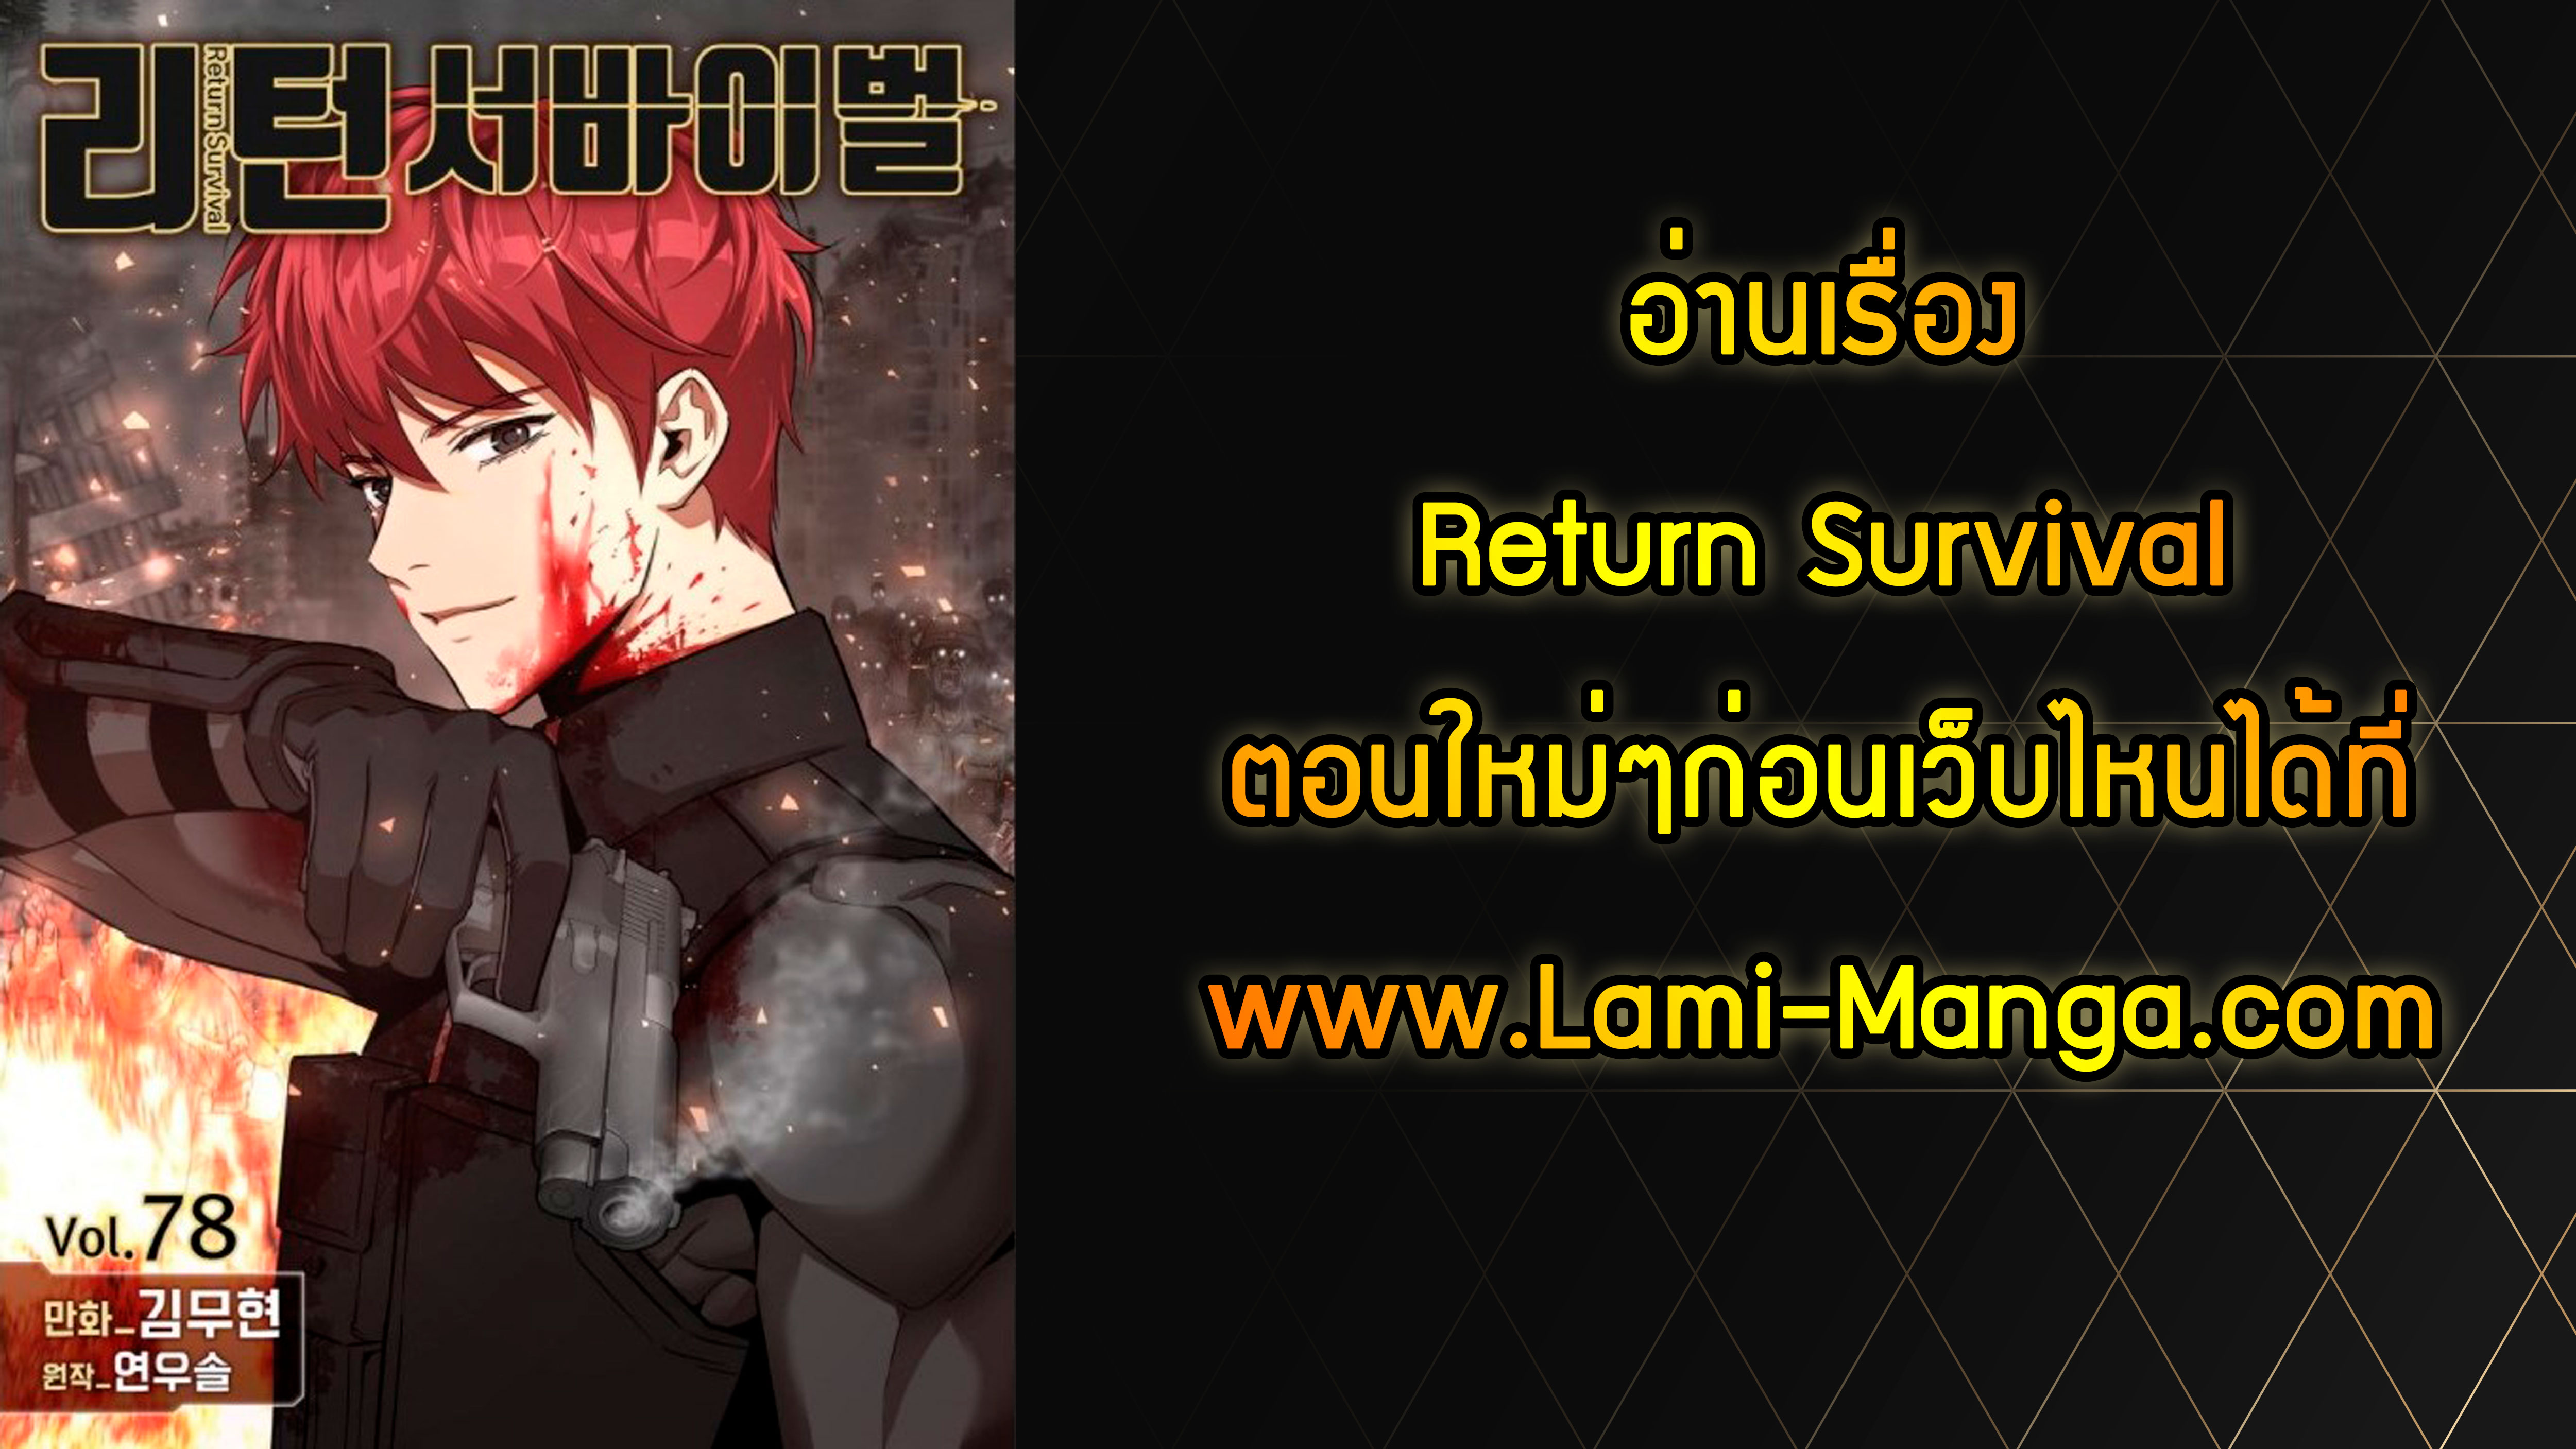 Return survival 43 (47)